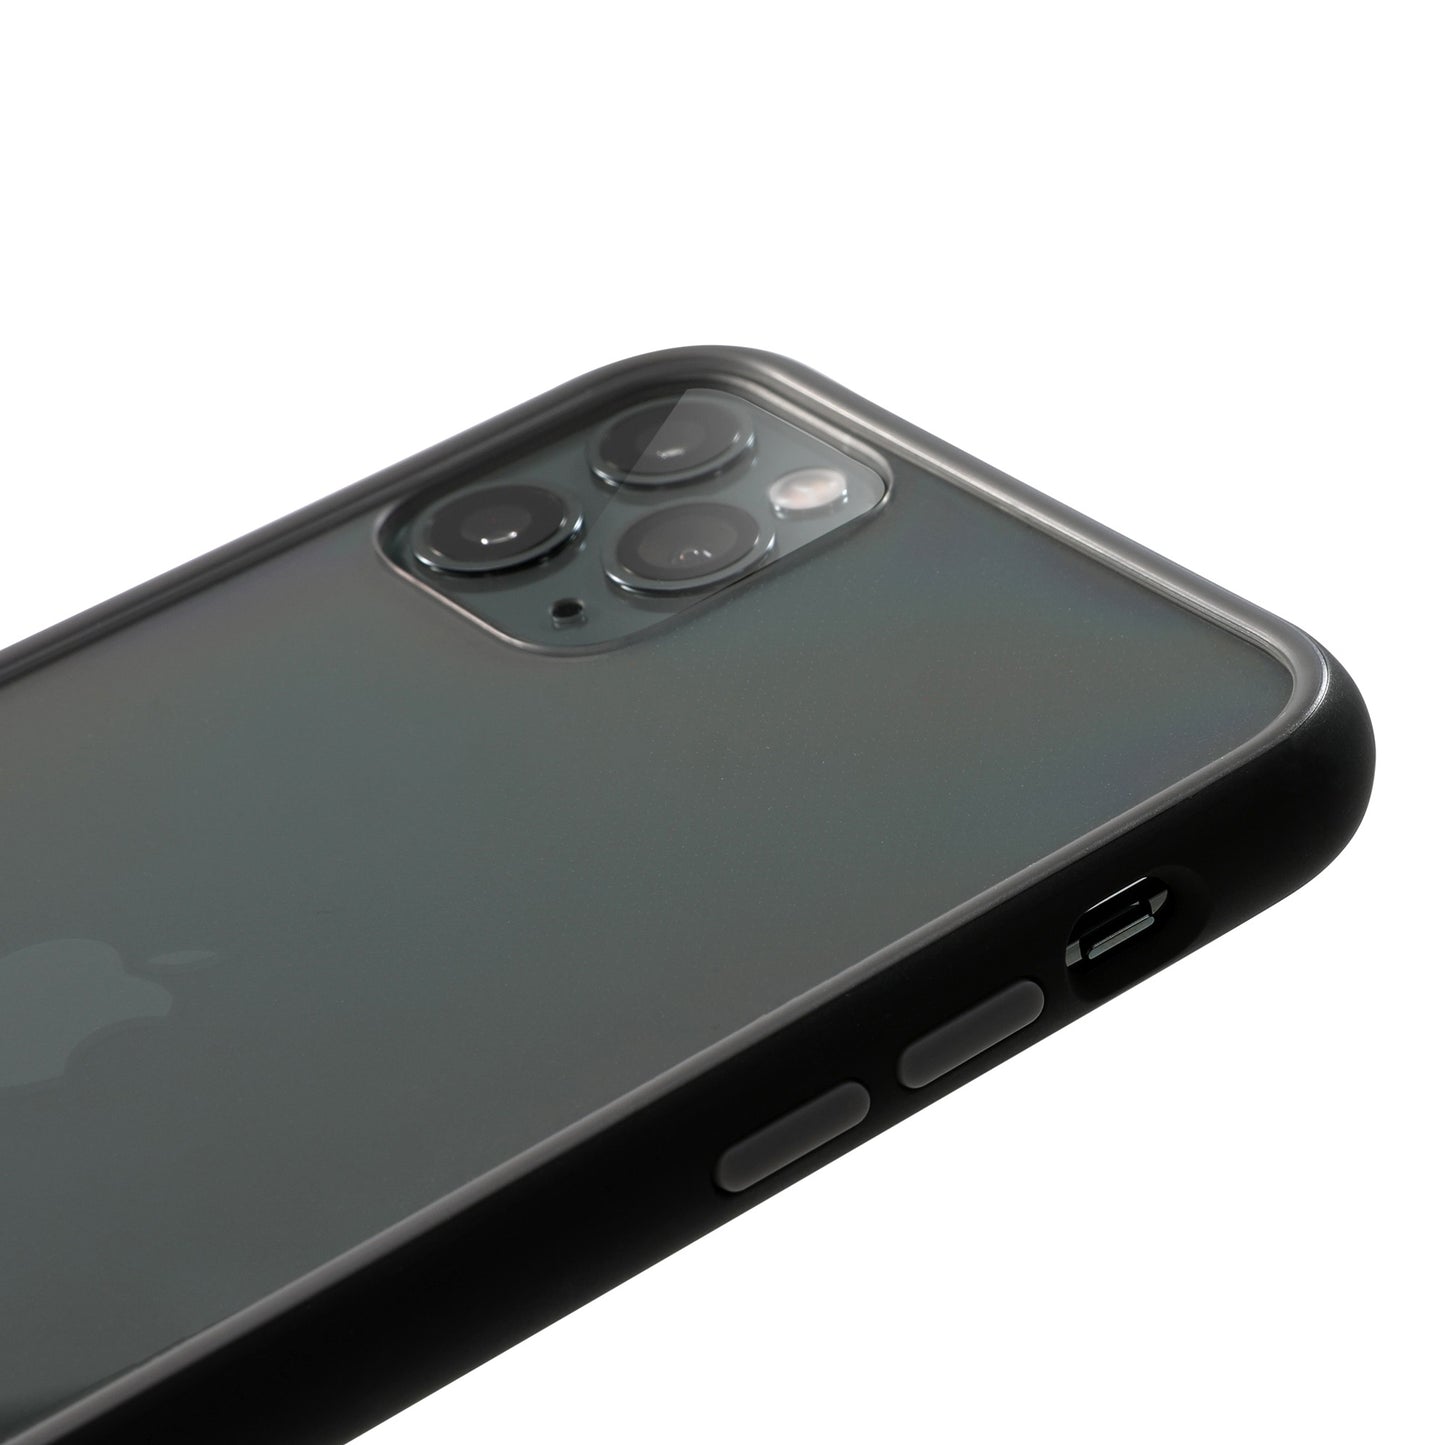 iPhone 11 Pro Case ZEETEC PureGuard Slim Protection